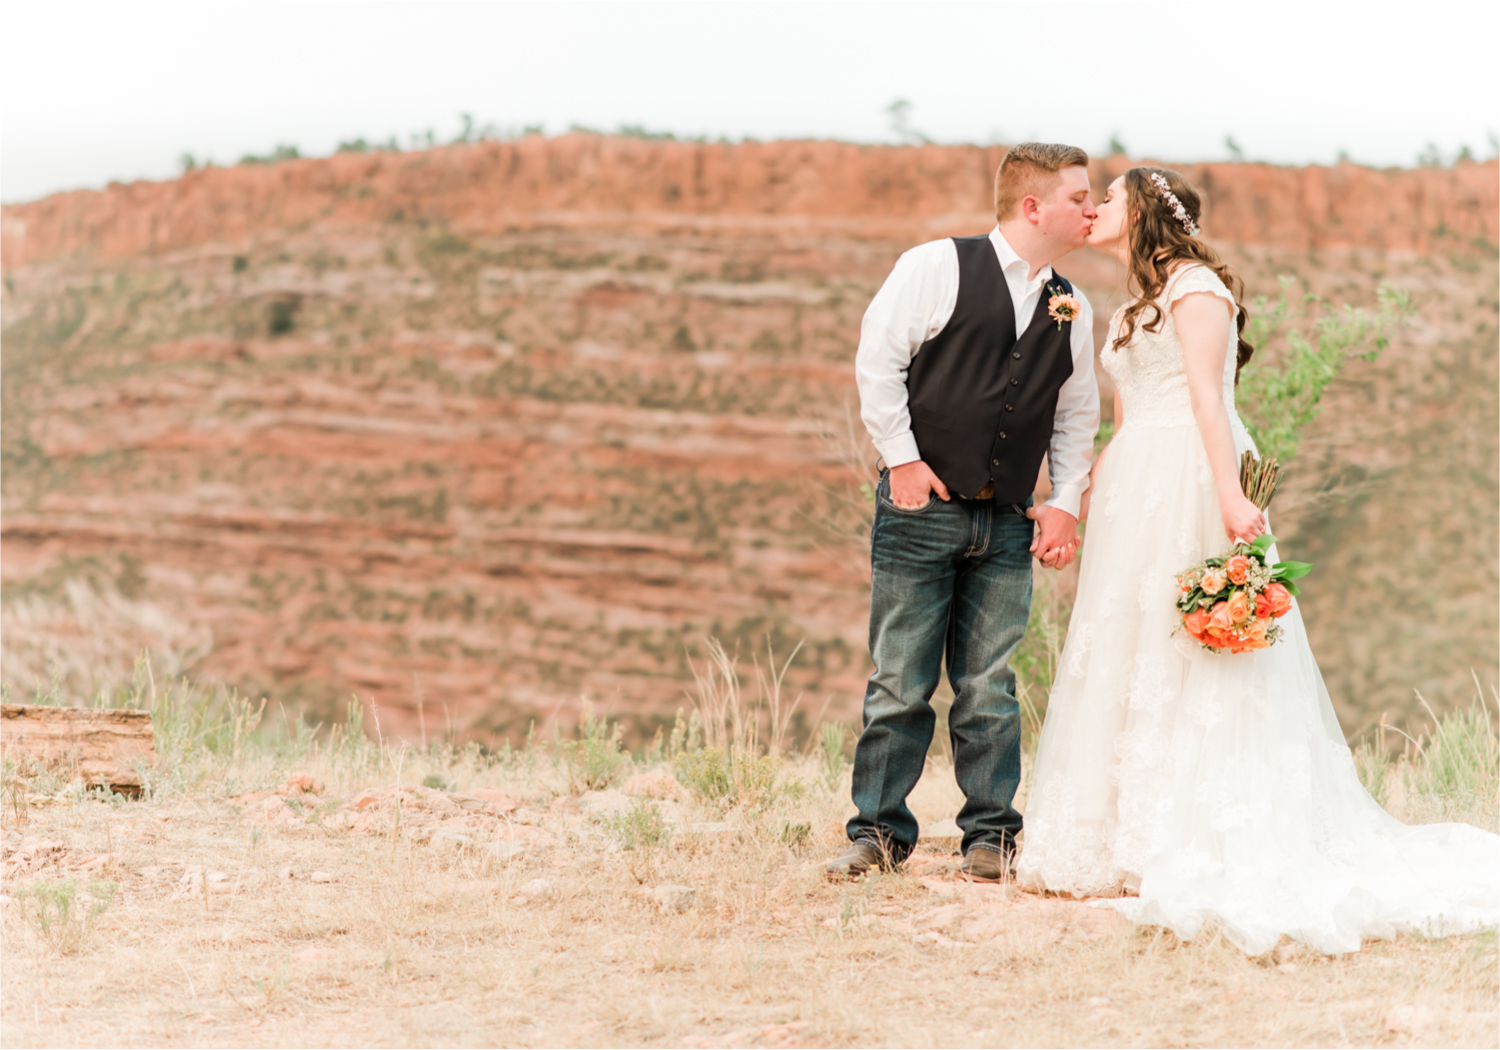 Rustic Summer Wedding at Ellis Ranch in Loveland Colorado | Britni Girard Photography | Wedding Photography and Video Team